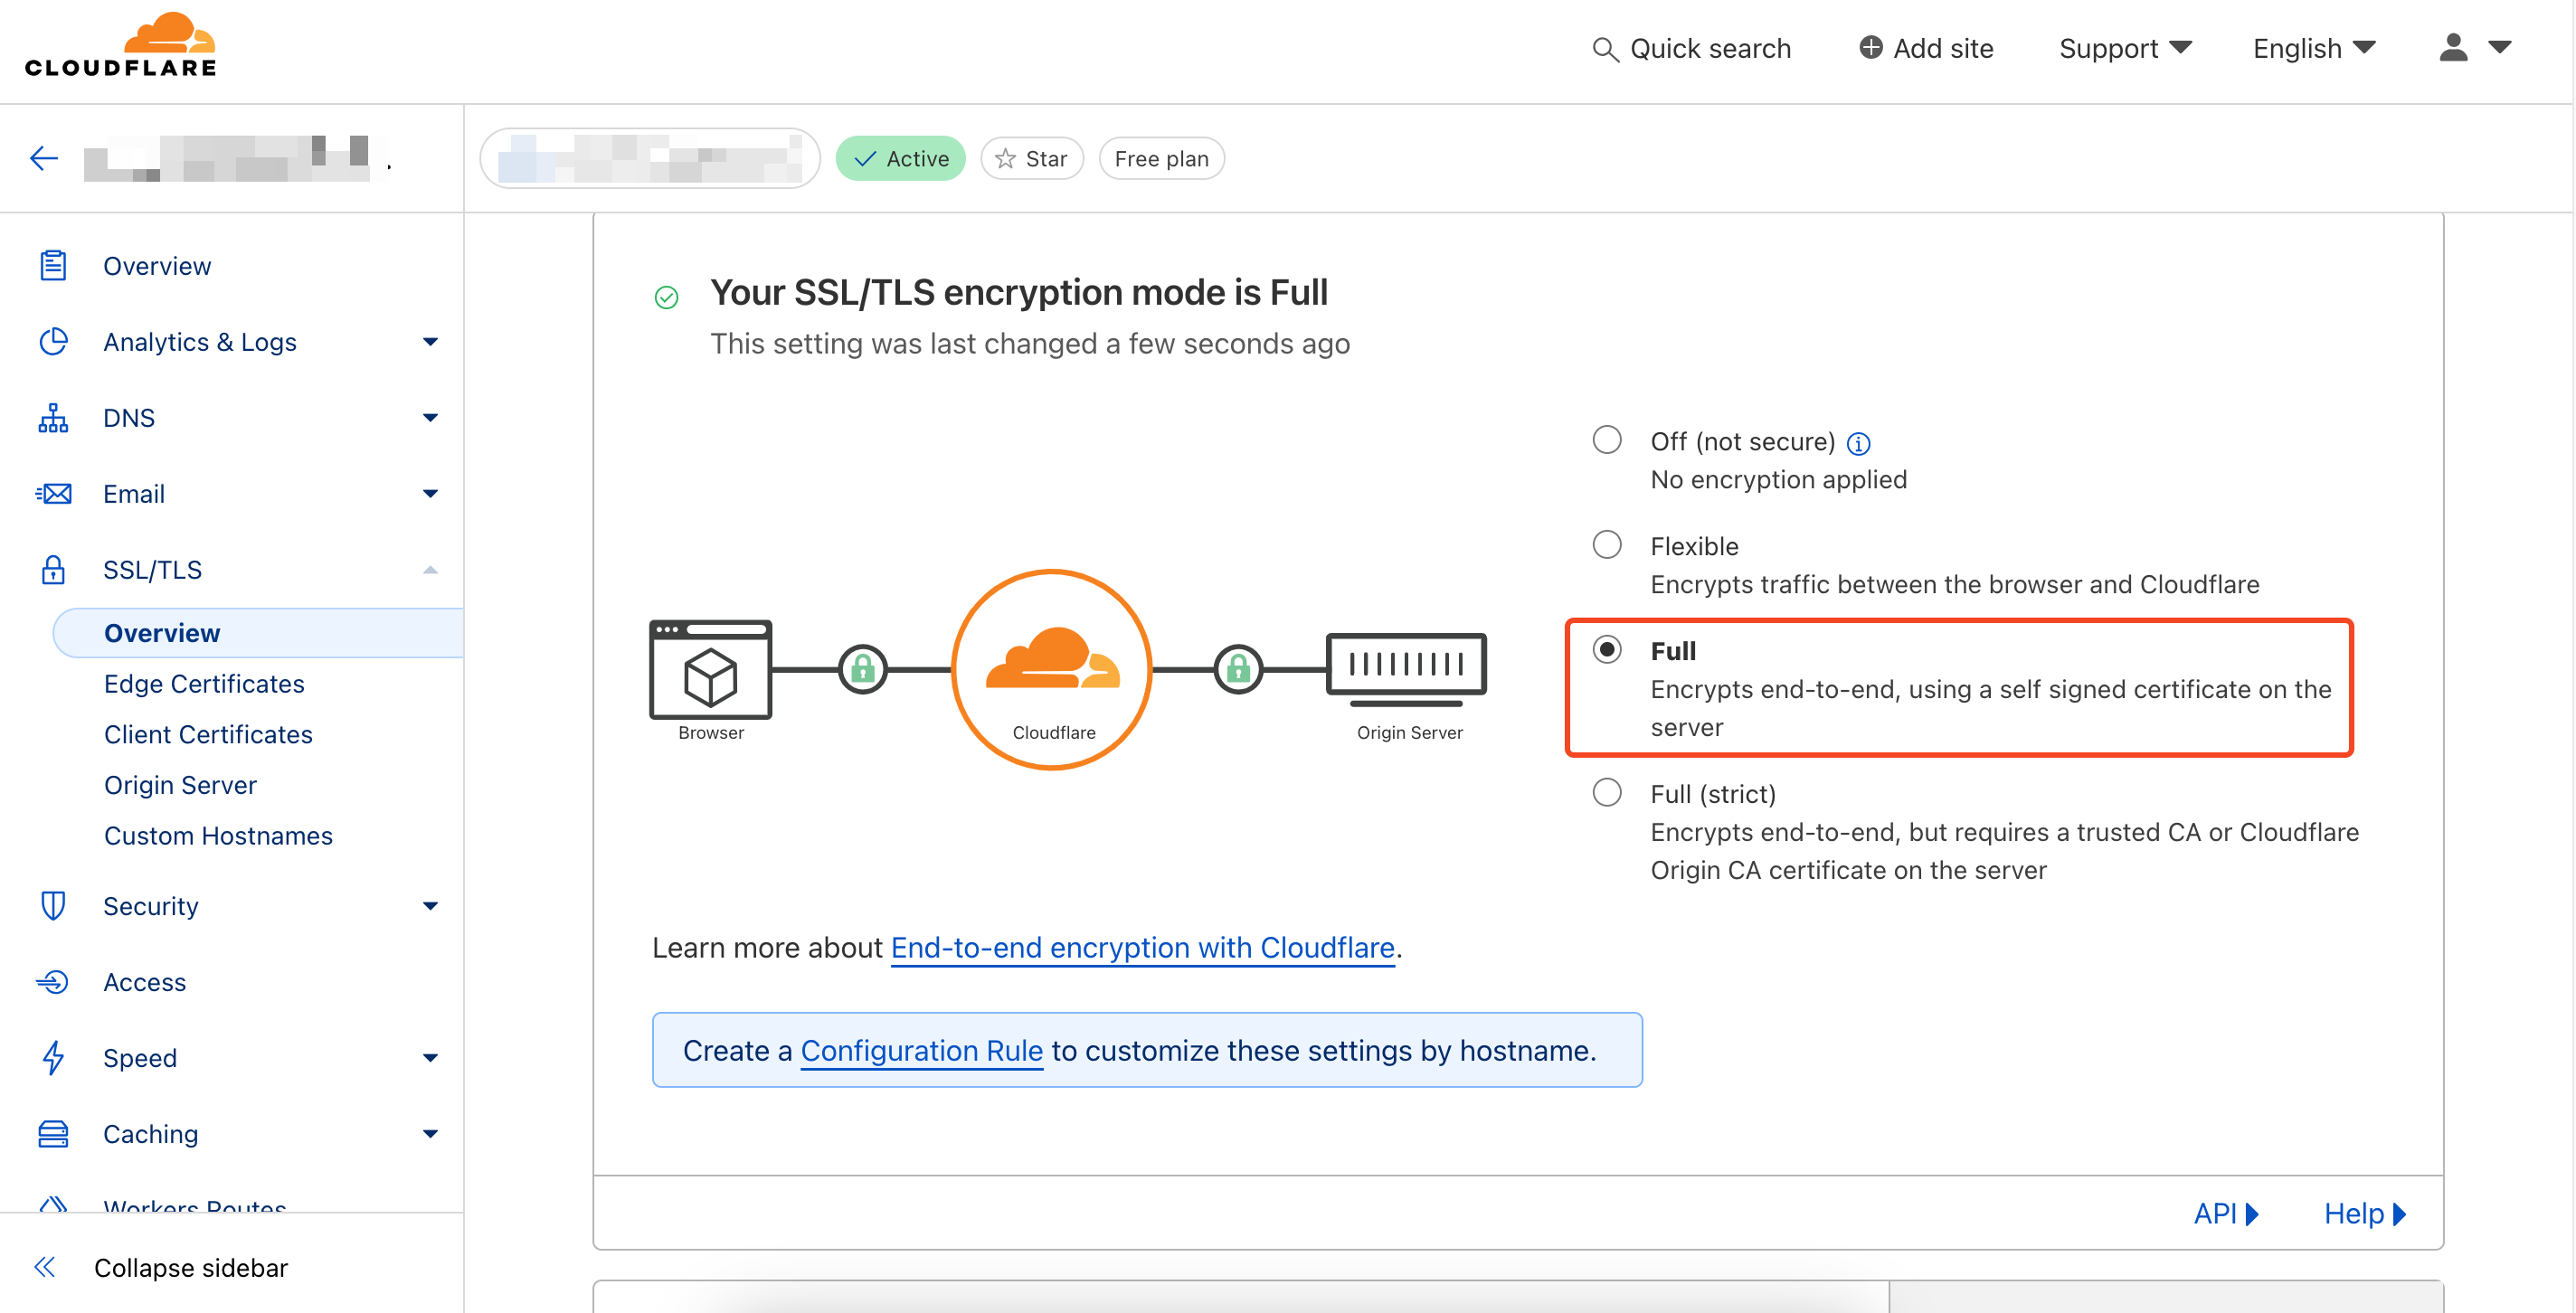 SSL/TLS encryption mode to Full